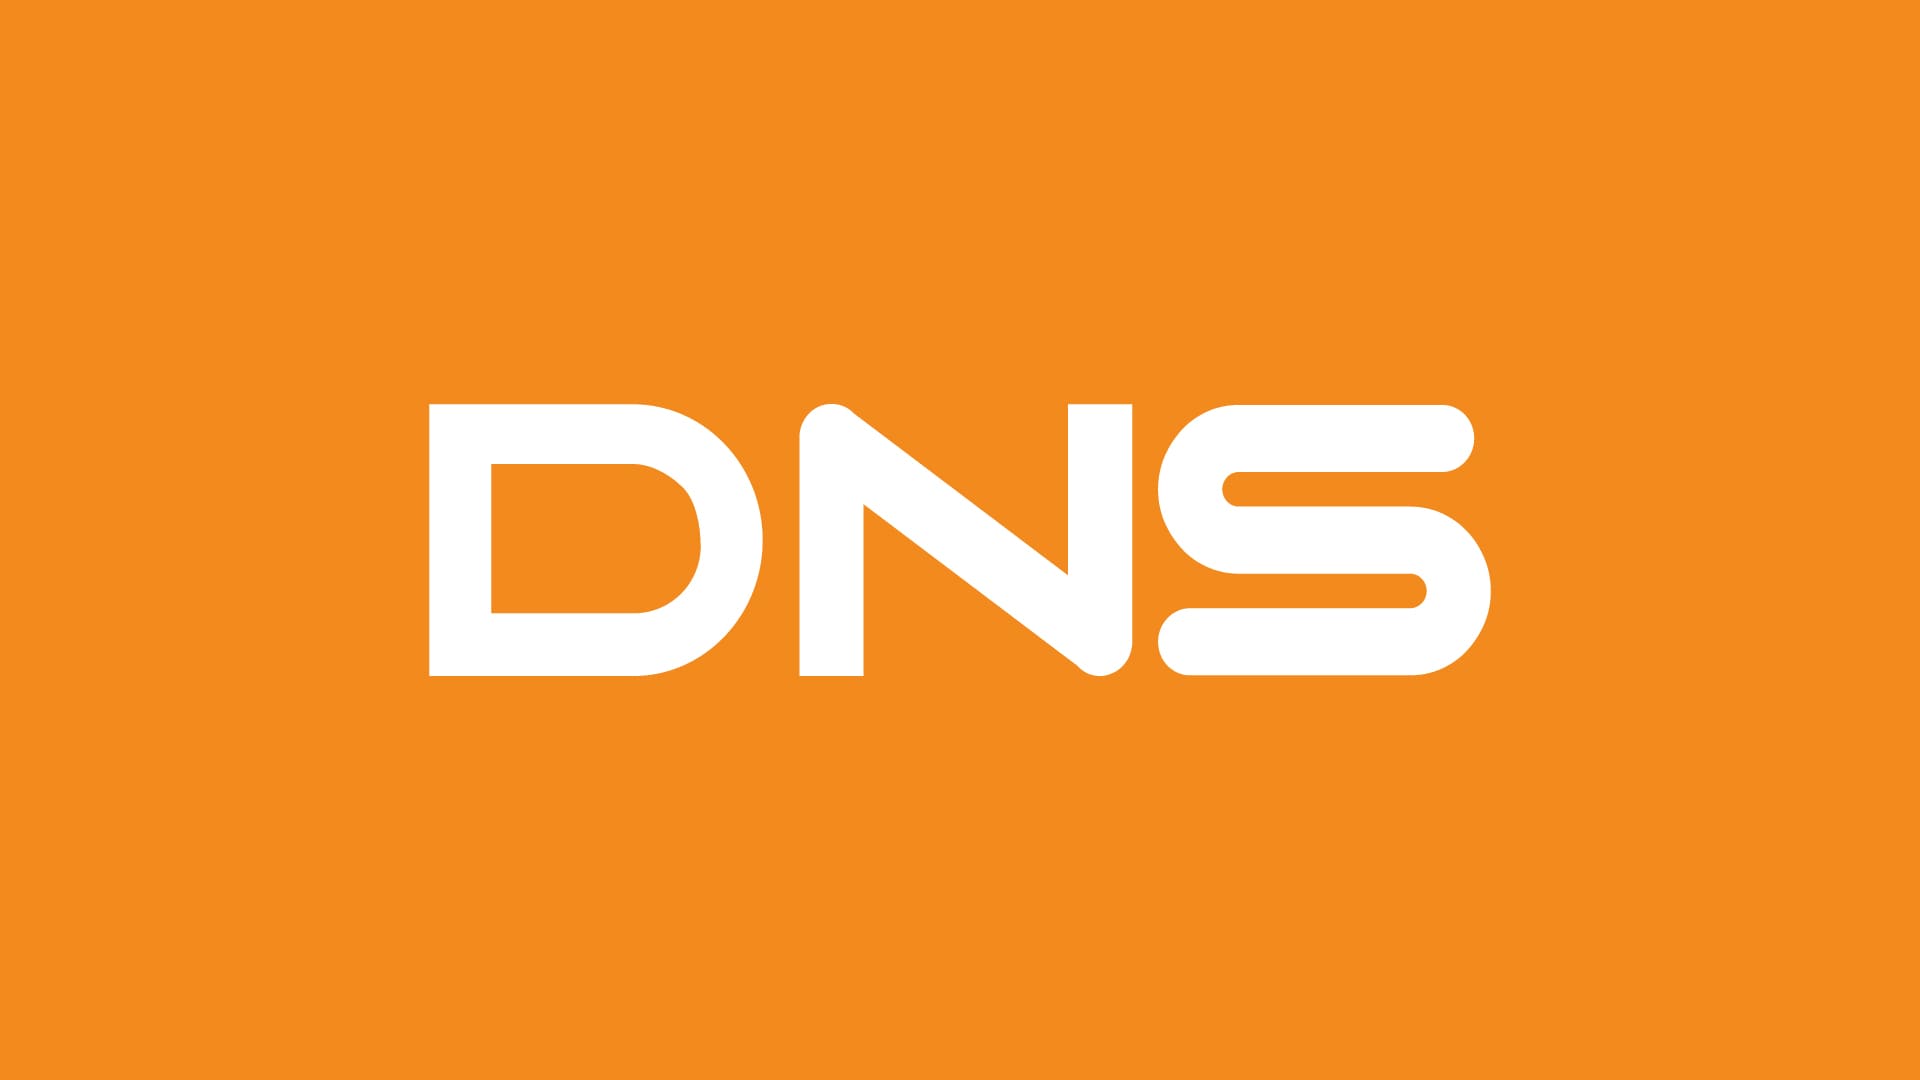 Днм сайт днс интернет магазин. ДНС. DNS эмблема. ДНСЗ. Логотип магазина ДНС.